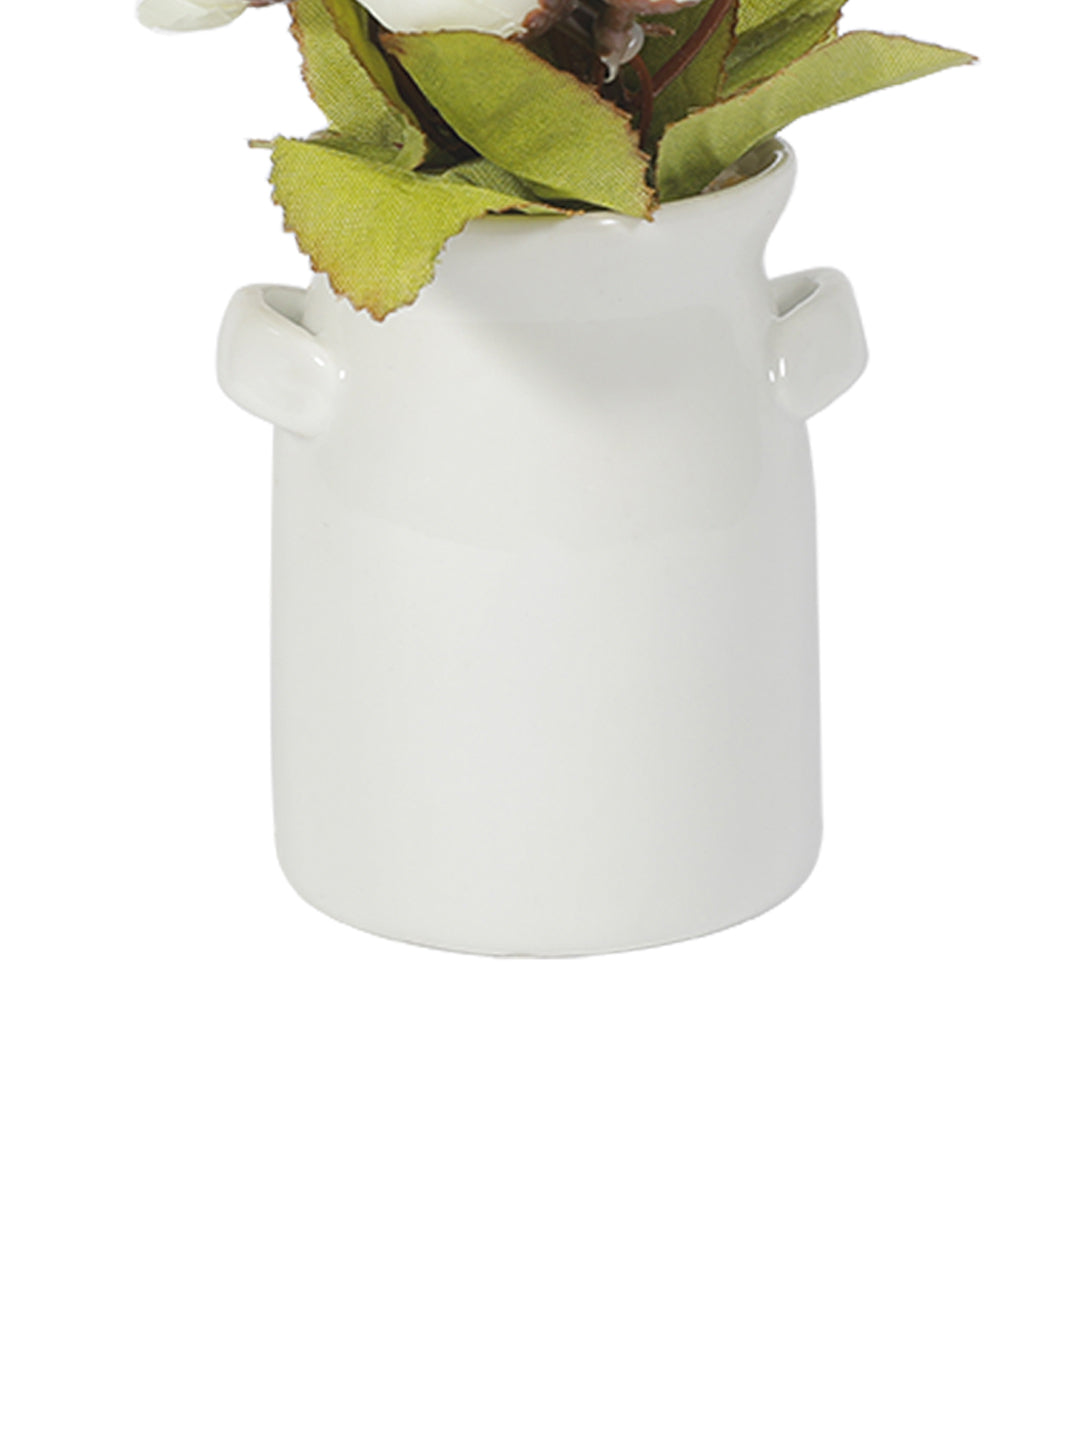 VON CASA Cylindrical Plastic Flower With Pot - White Rose White Pot